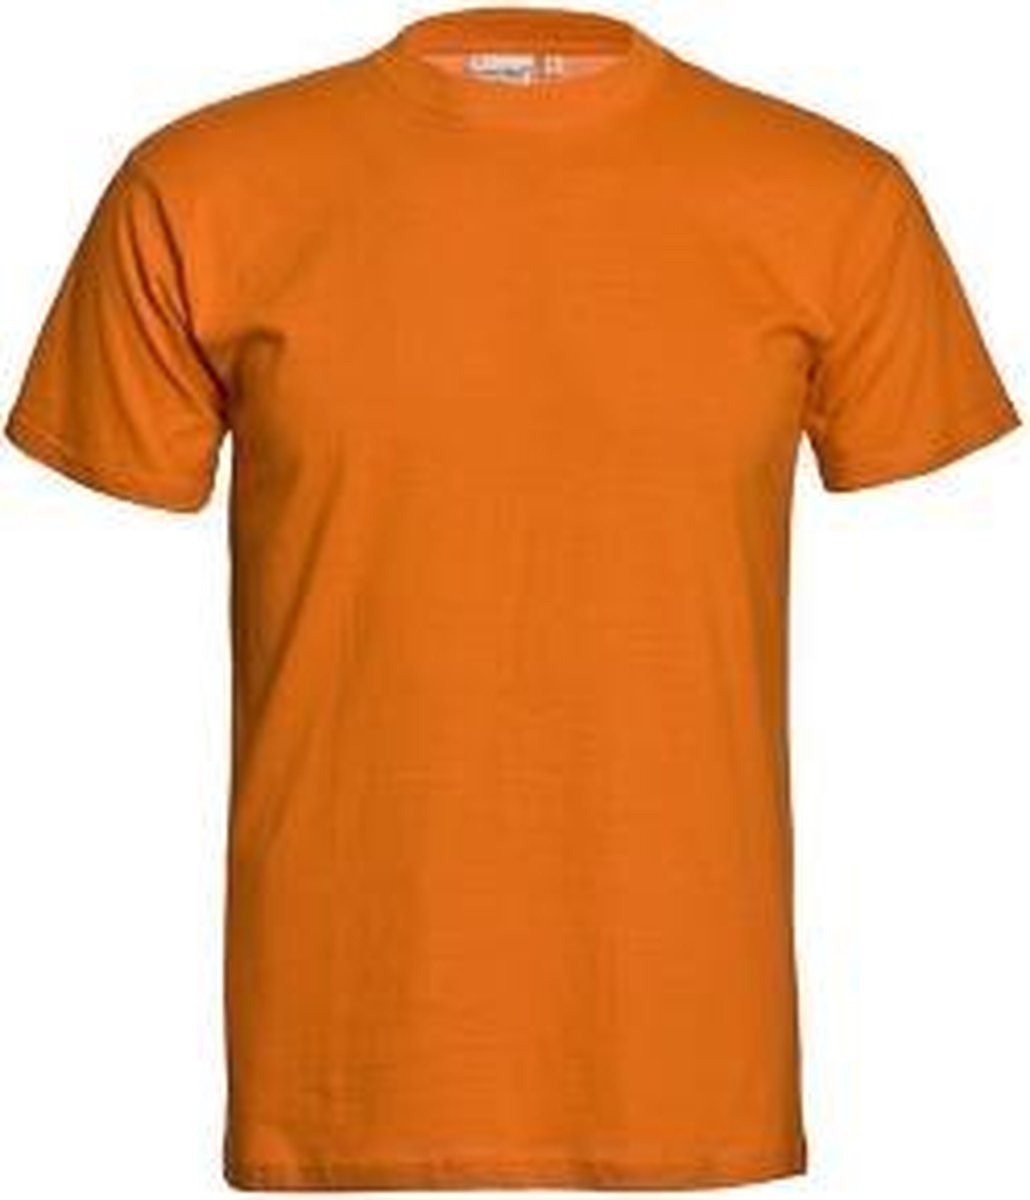 Santino oranje T-shirt Maat XL (vallen ruim)